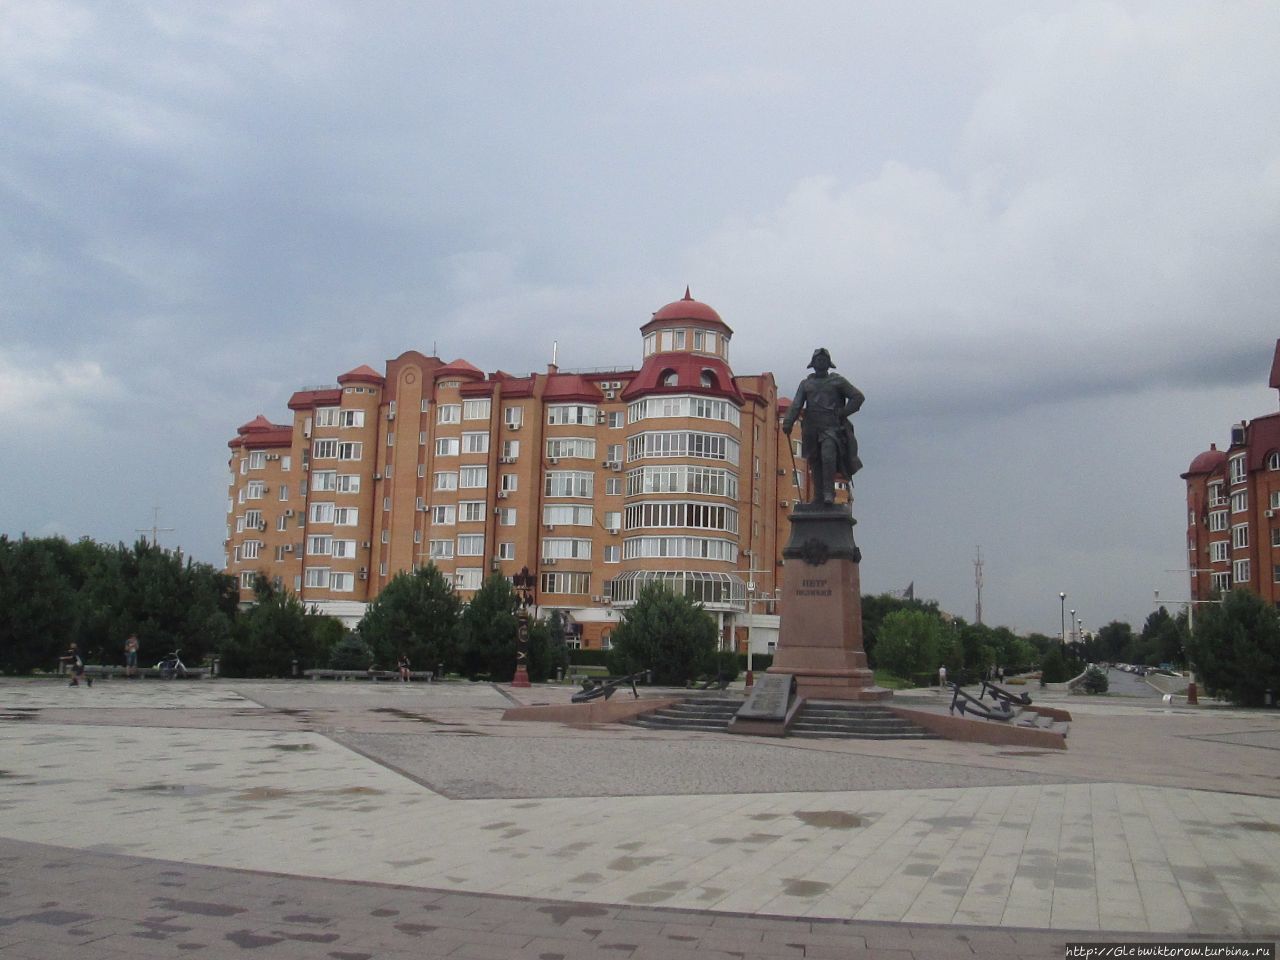 Сквер Петра I Астрахань, Россия